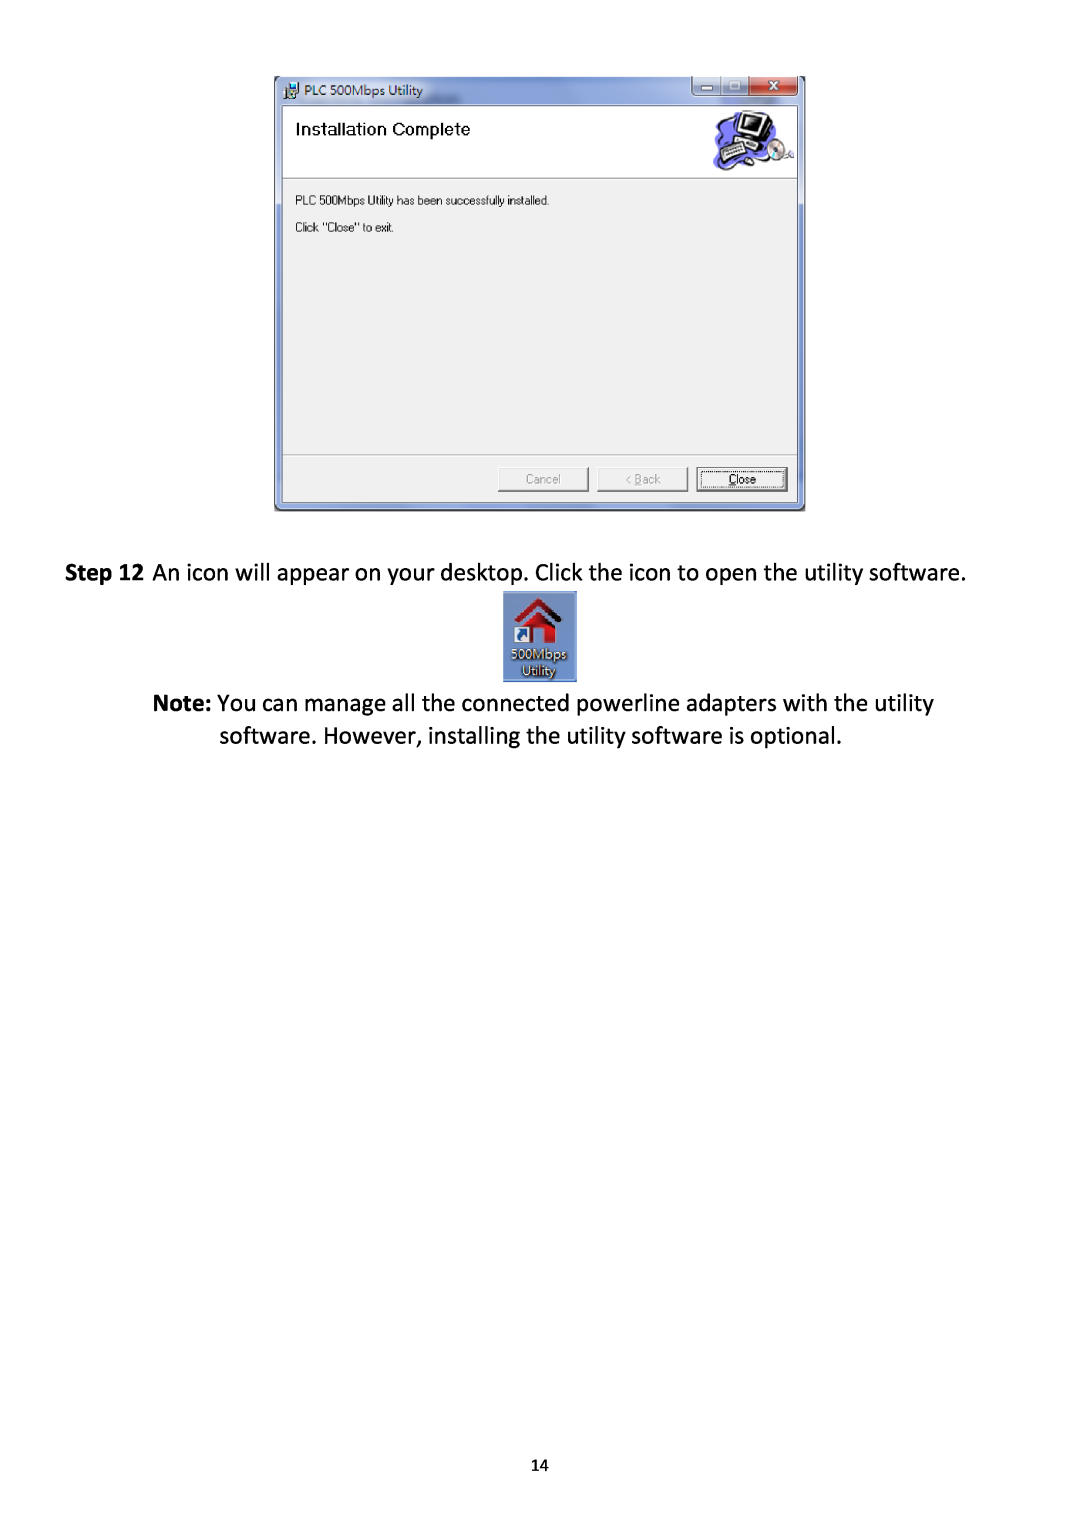 Edimax Technology HP-5102 user manual 